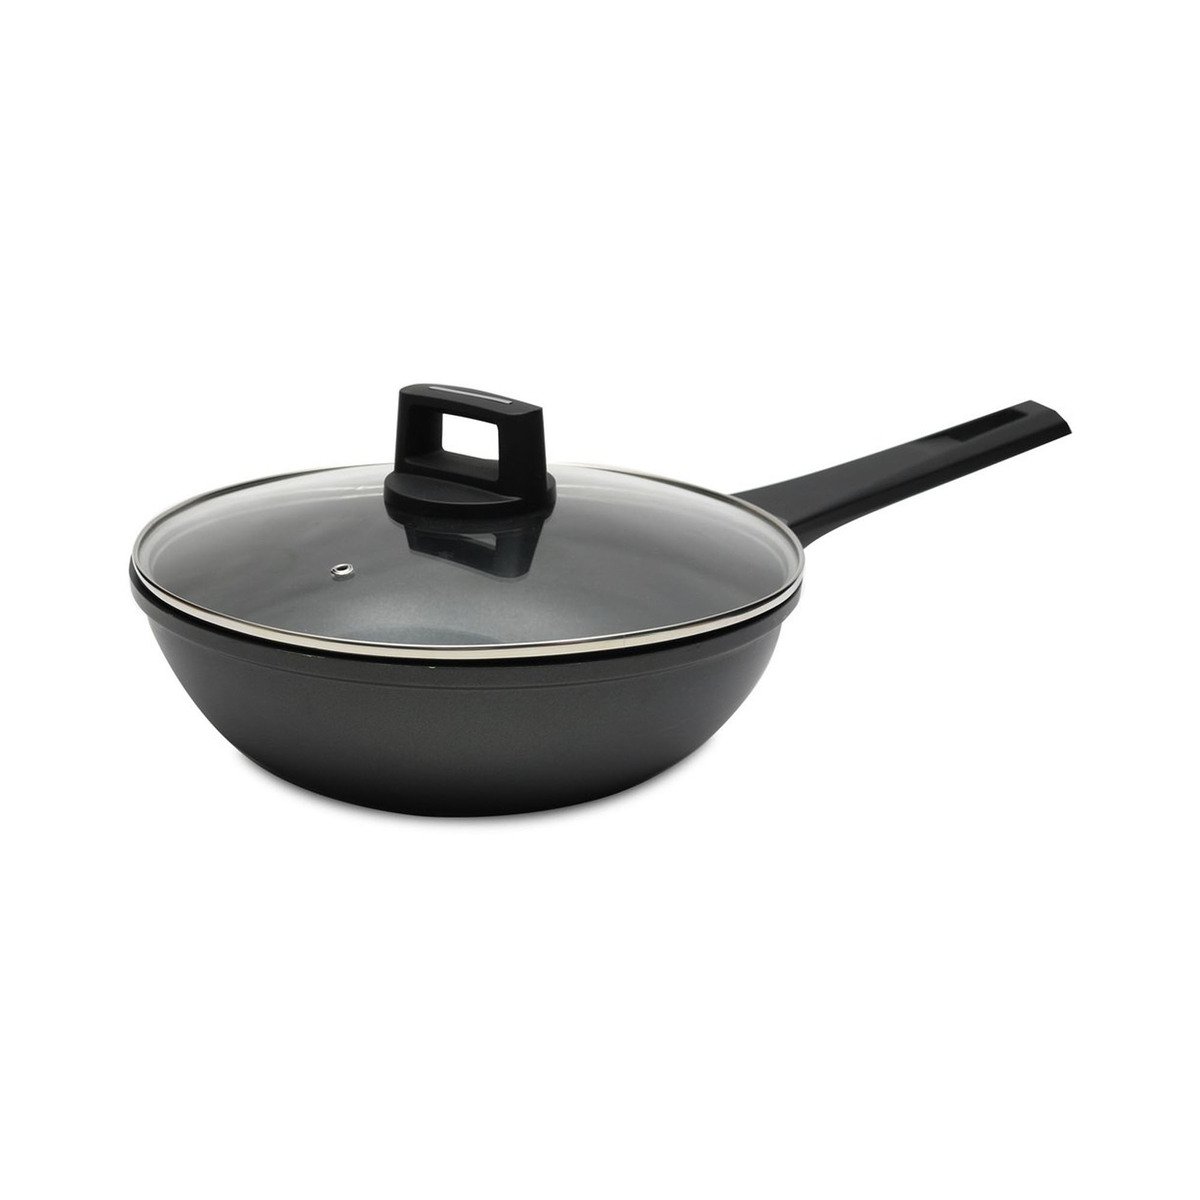 Chefline Diecast Wok Pan with Lid, 30 cm, G30